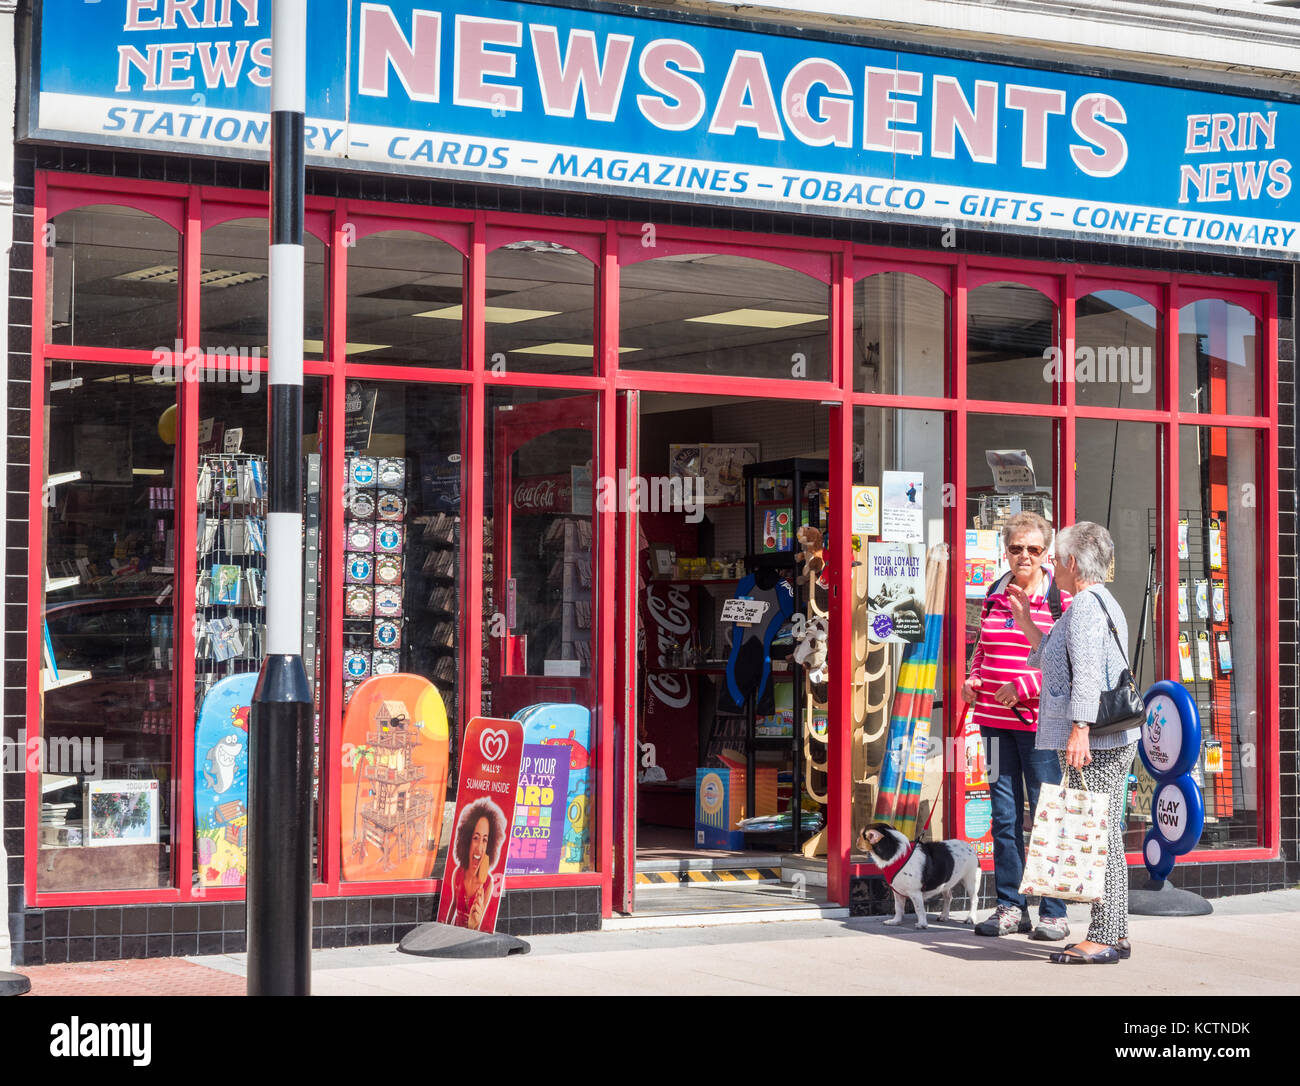 Erin News shop, Port Erin, Isle of Man. Stock Photo